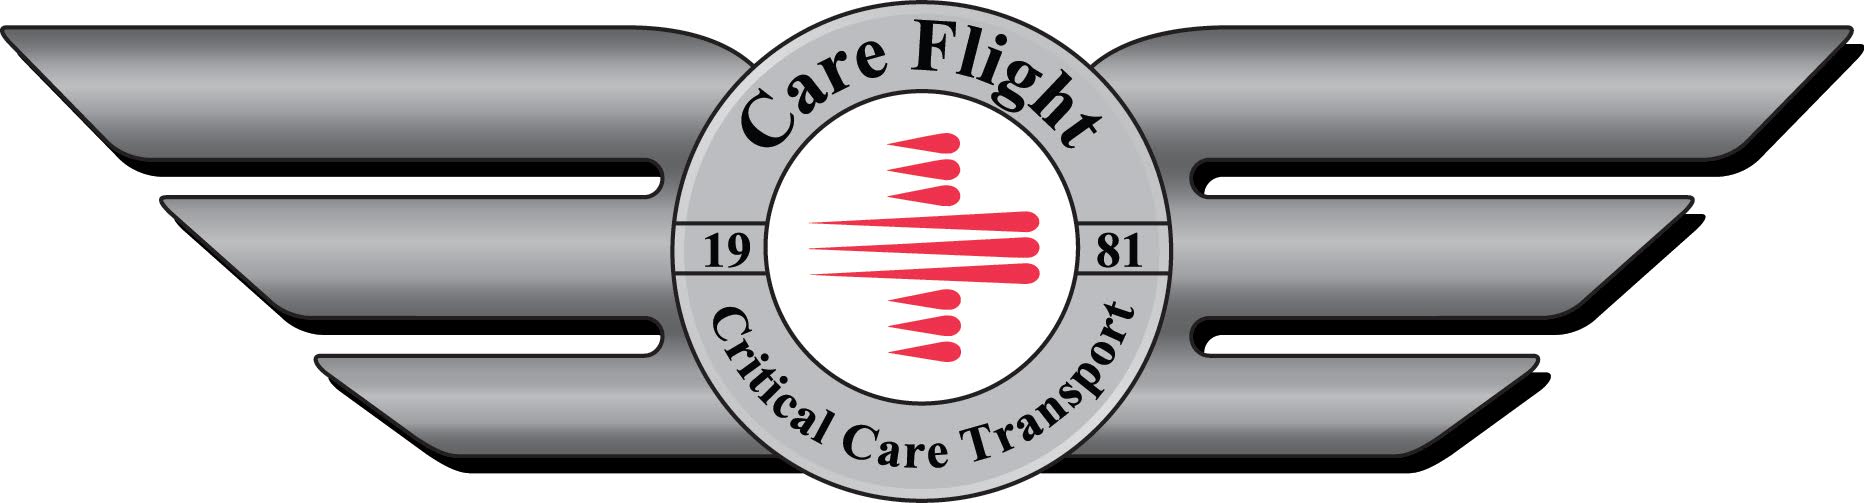 Flight Nurse Logo - Care Flight Nurse in Reno, Nevada. Air Medical Jobs